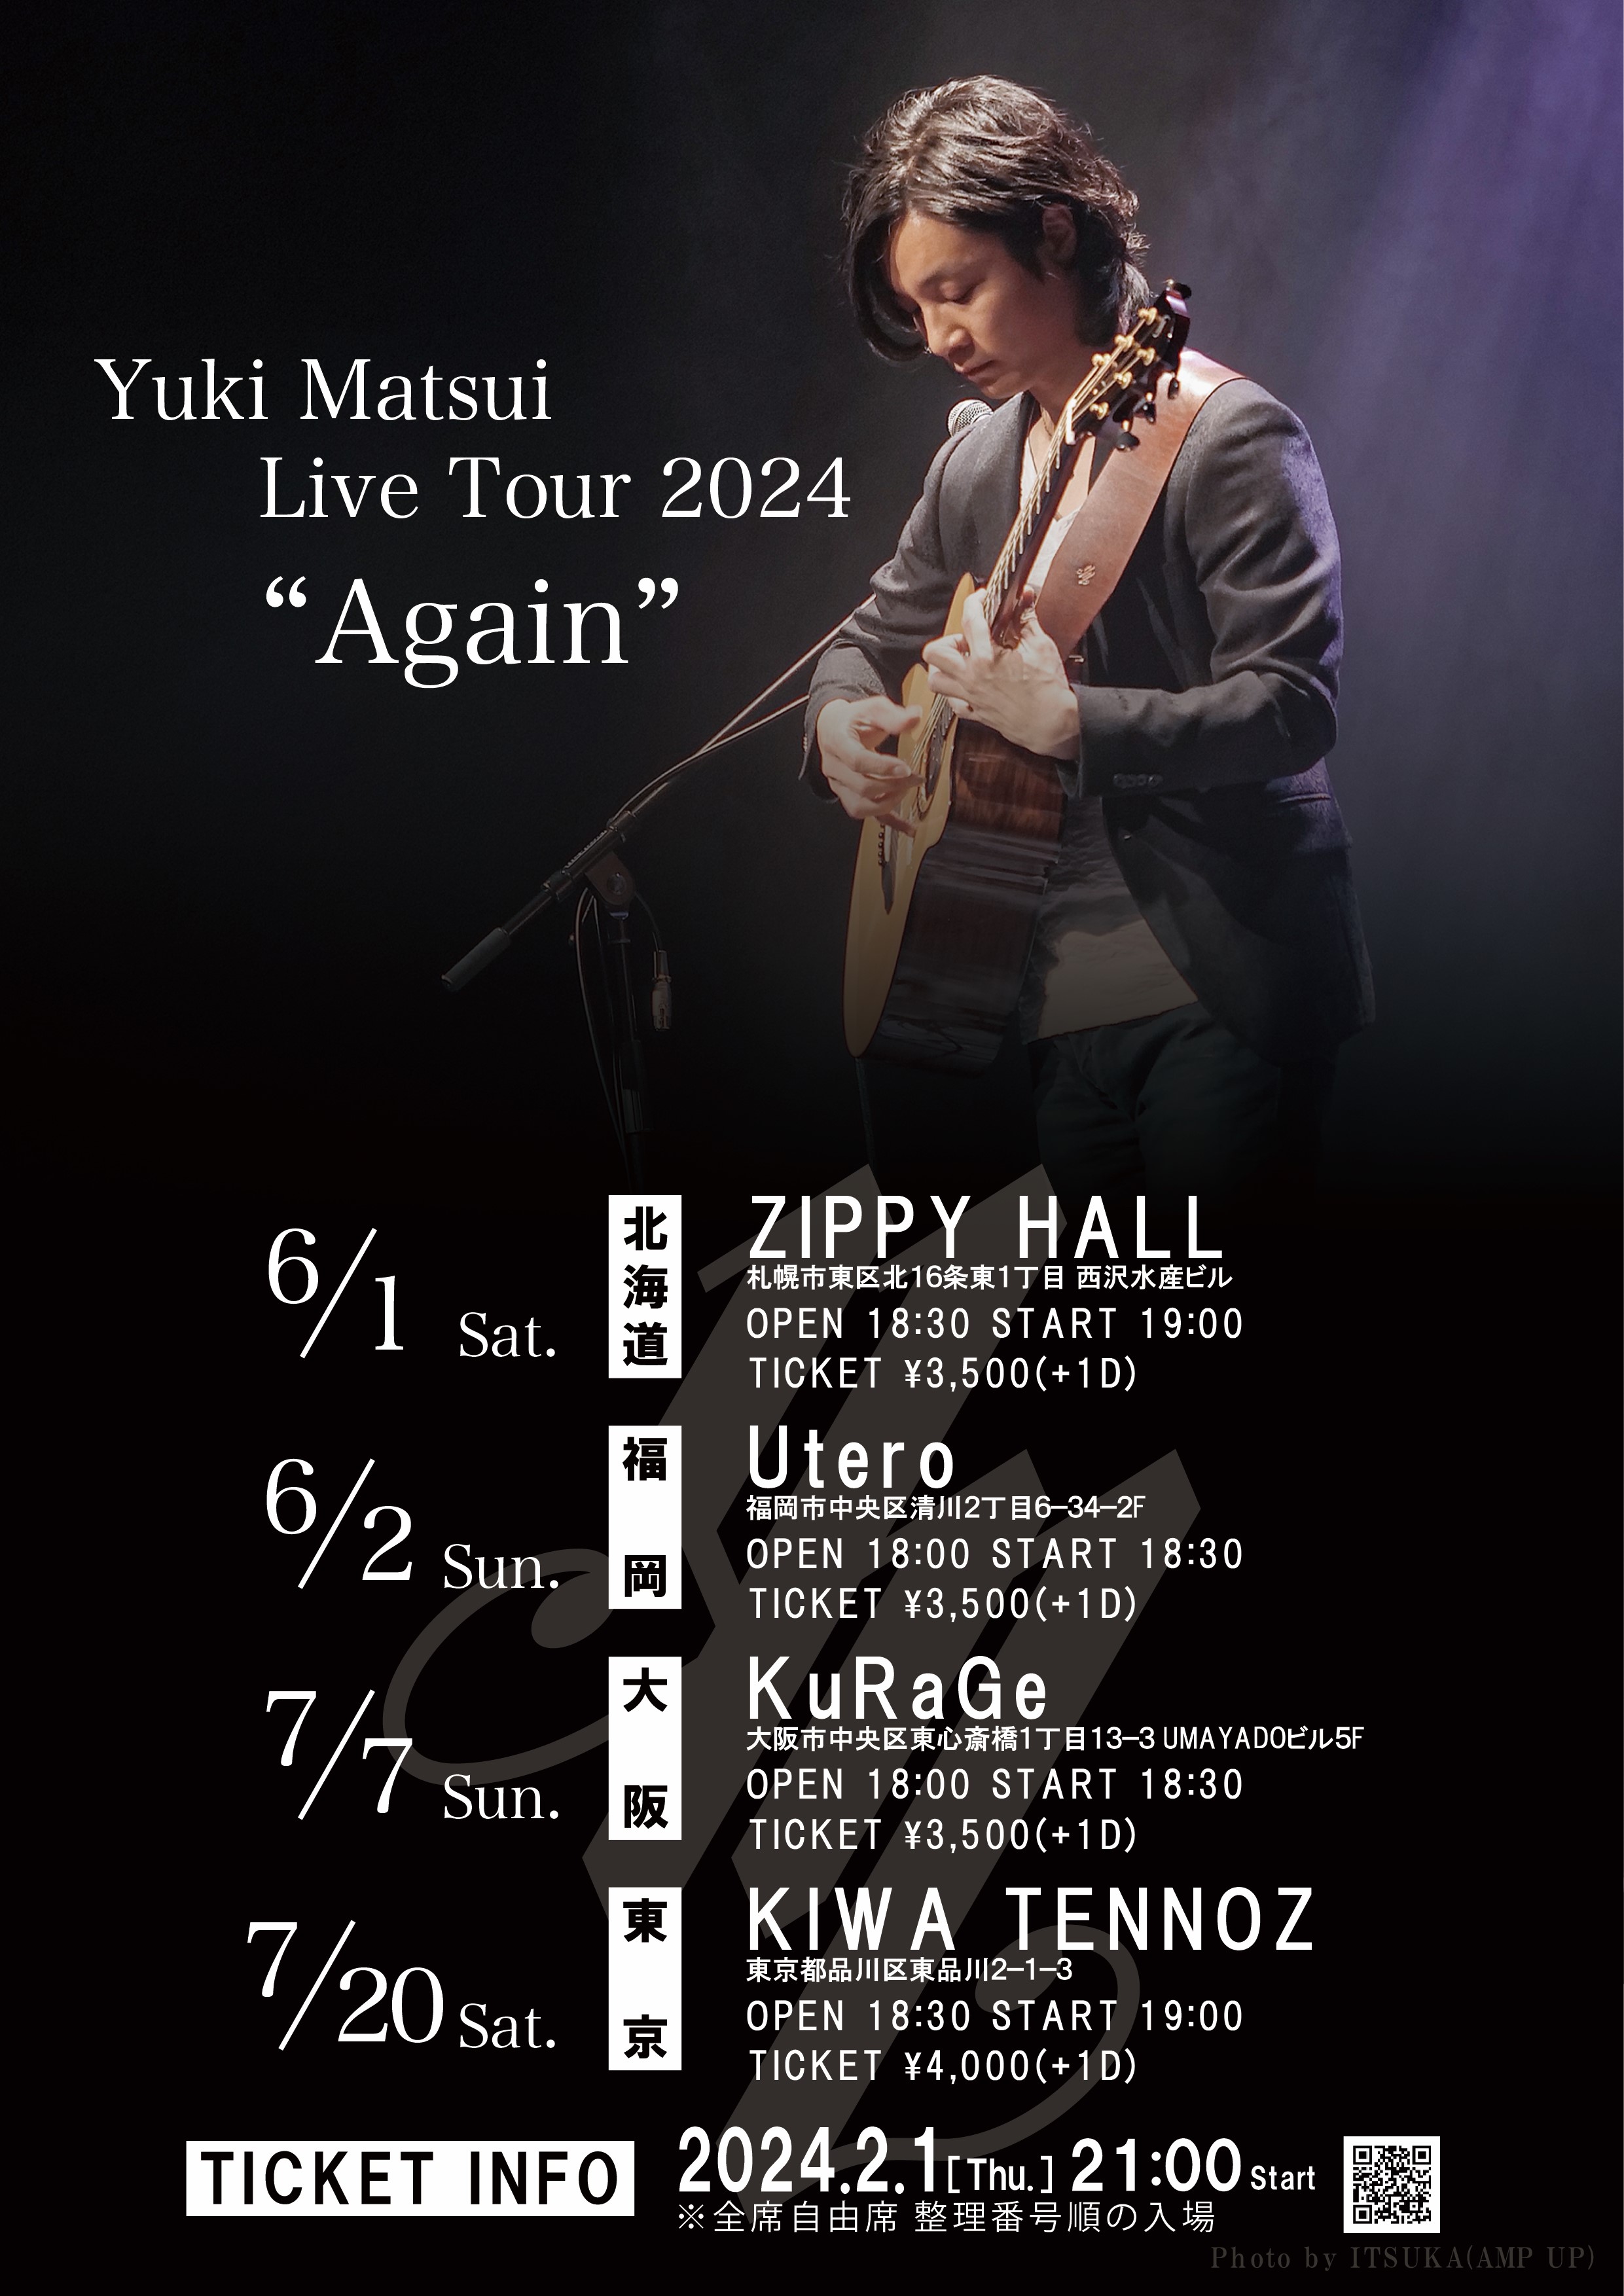 Yuki Matsui Live Tour 2024 “Again”